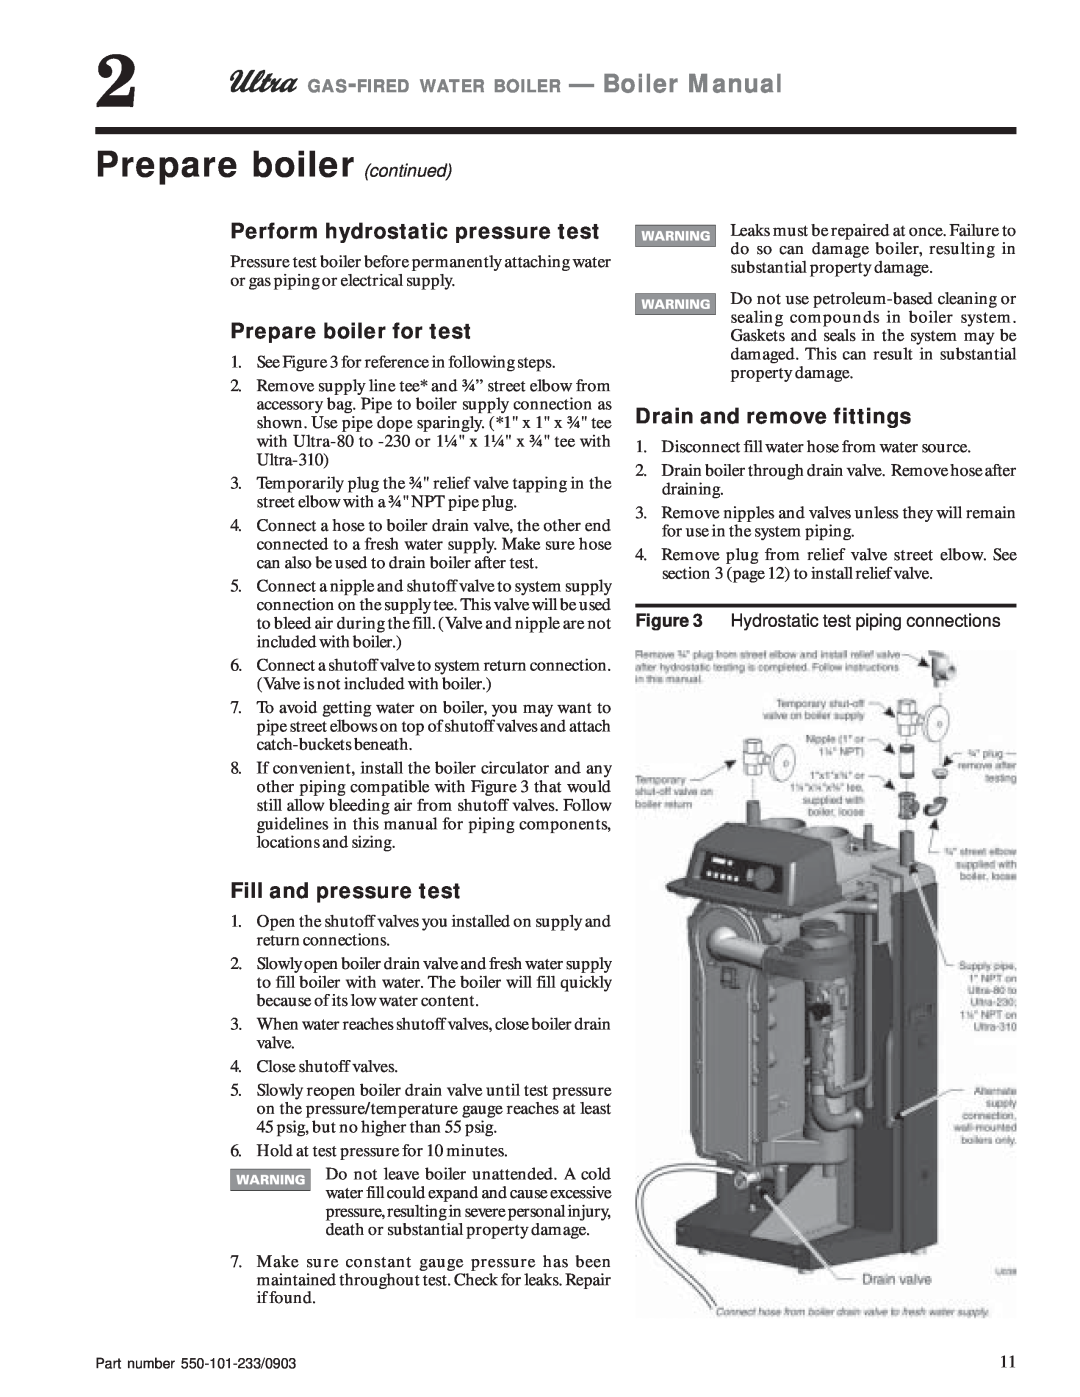 Weil-McLain 230, 80, 310, 105, 155 manual Prepare boiler continued, Perform hydrostatic pressure test, Prepare boiler for test 